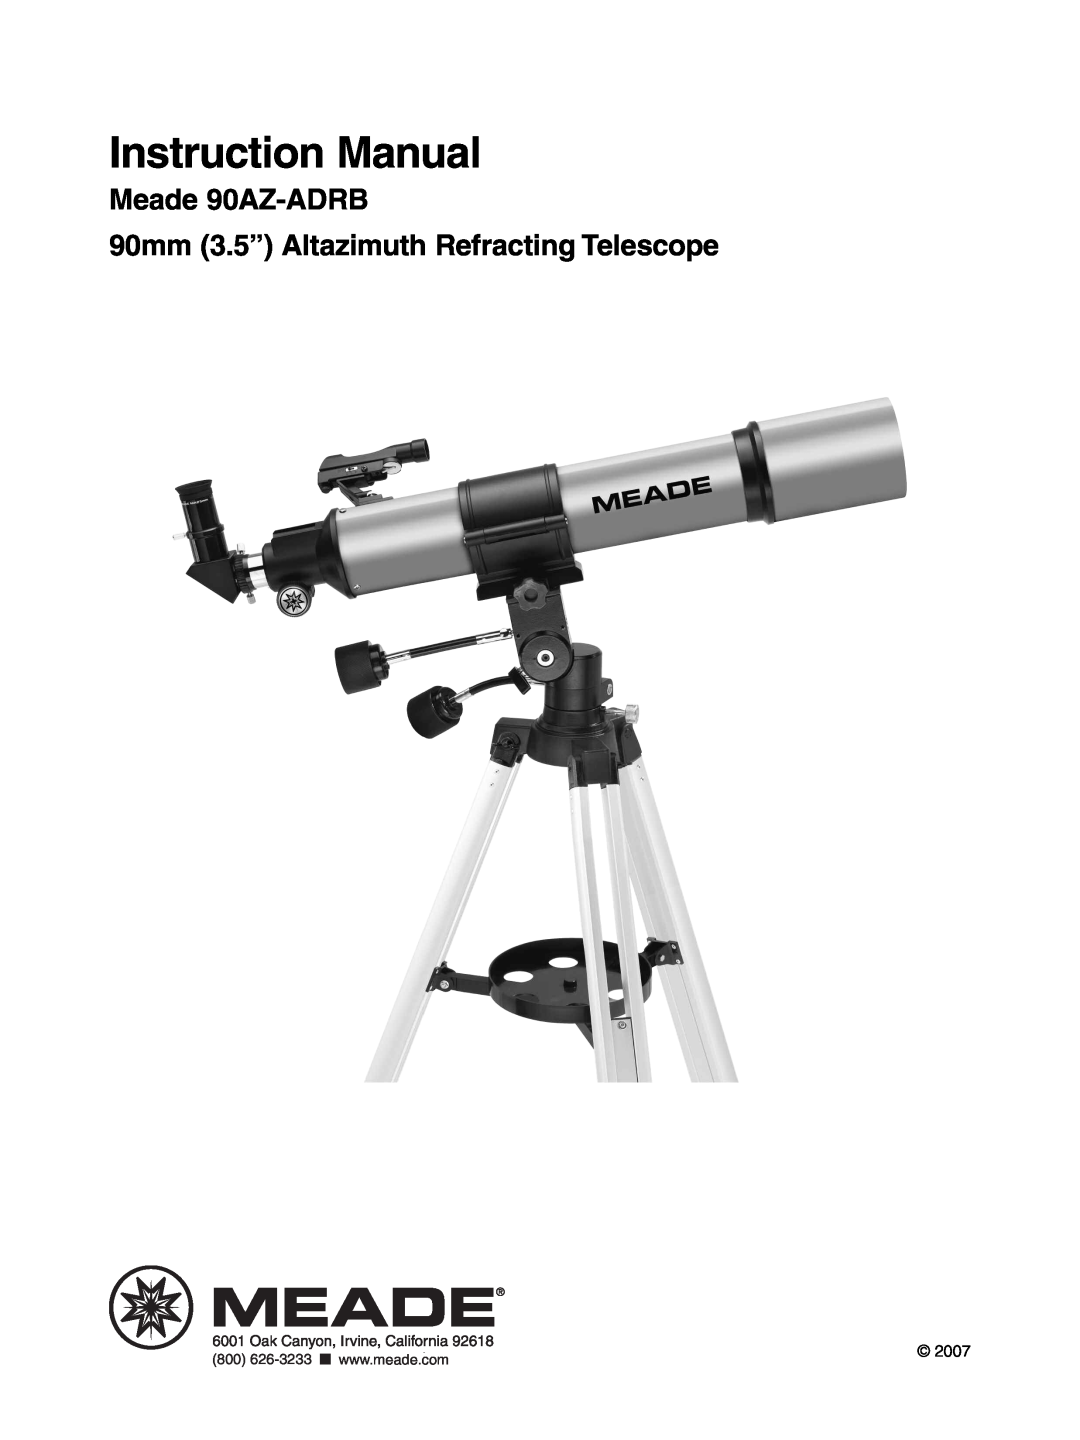 Meade instruction manual Instruction Manual, Meade 90AZ-ADRB 90mm 3.5” Altazimuth Refracting Telescope, 2007 